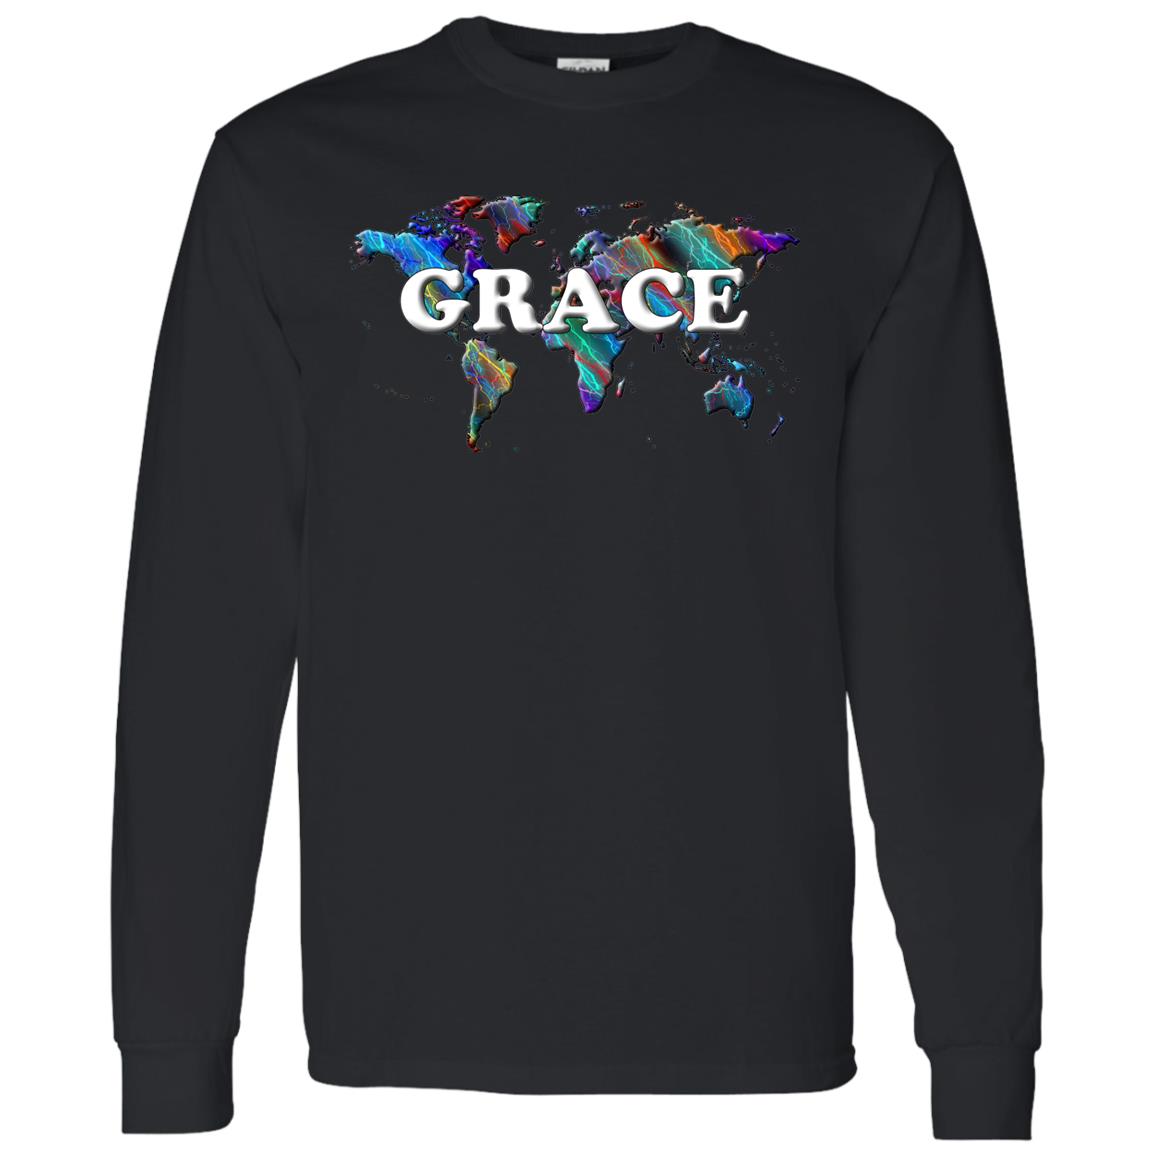 Grace Lonbg Sleeve T-Shirt